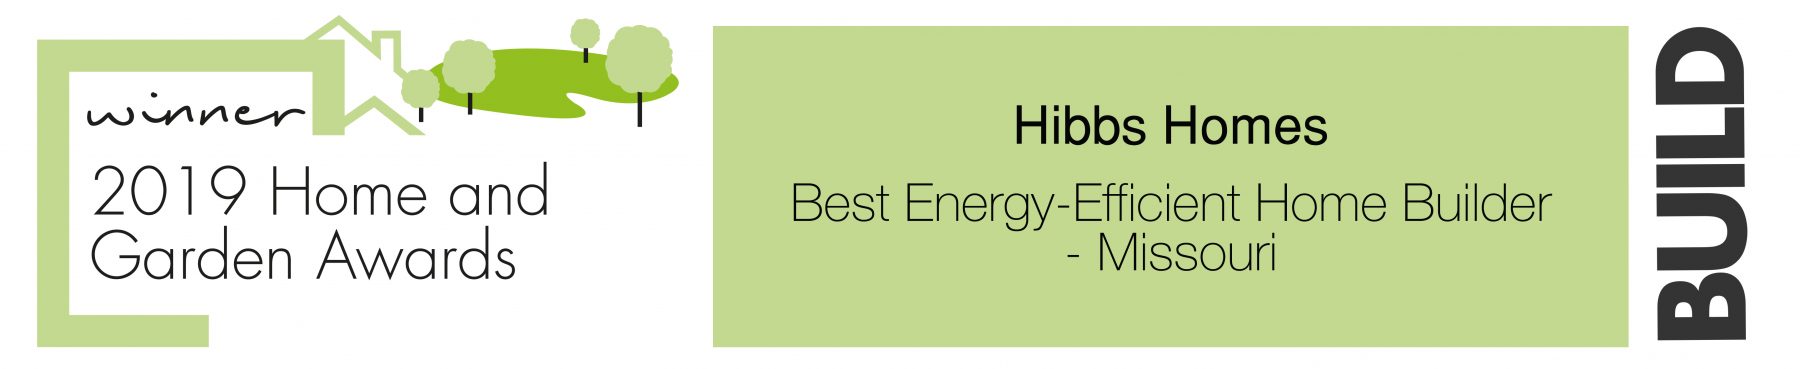 Best Energy Efficient Home Builder in Missouri Hibbs Homes Award